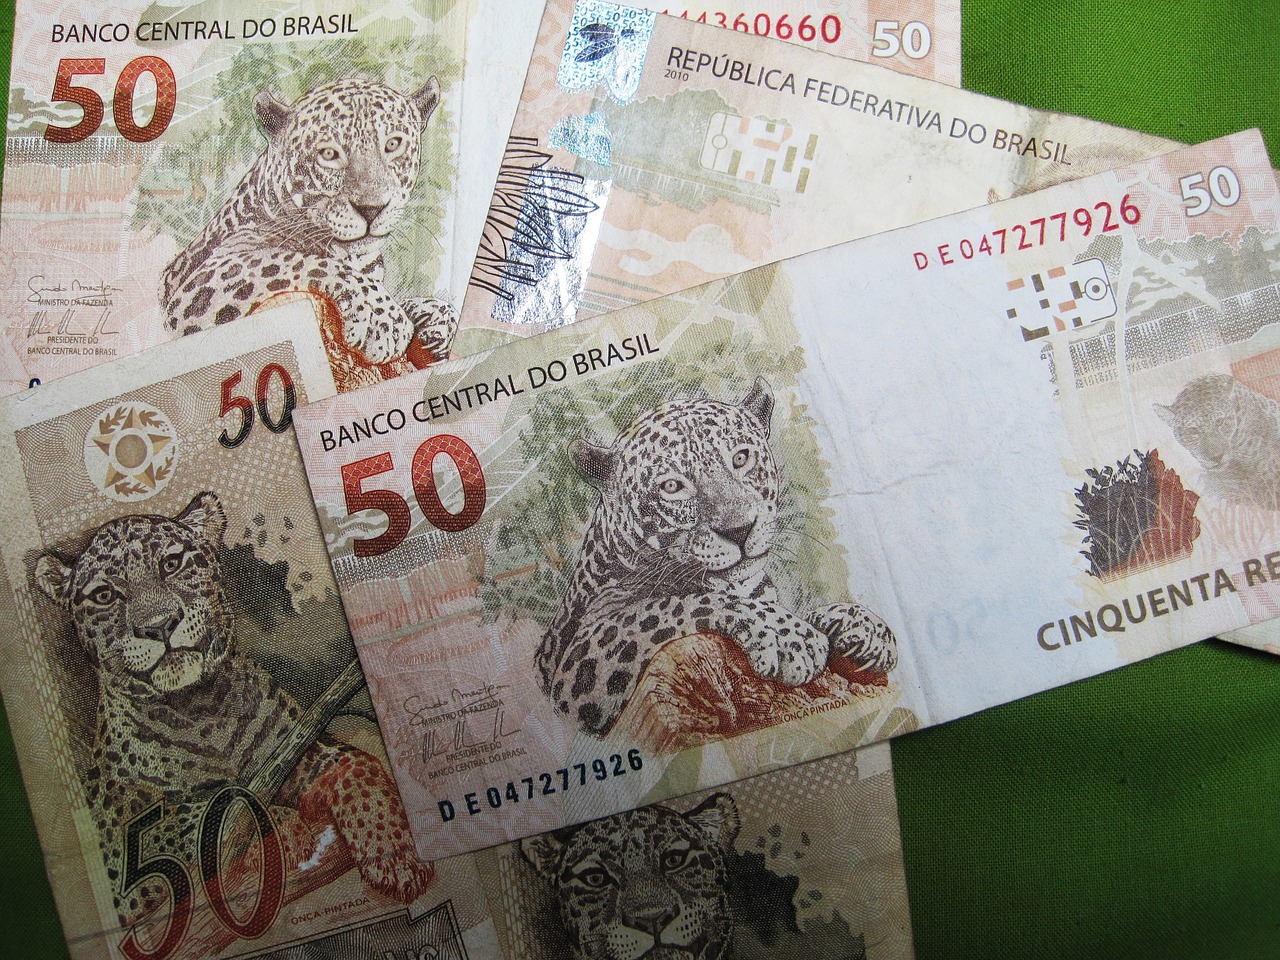 brazilian banknotes fifty real sheet music bills free photo